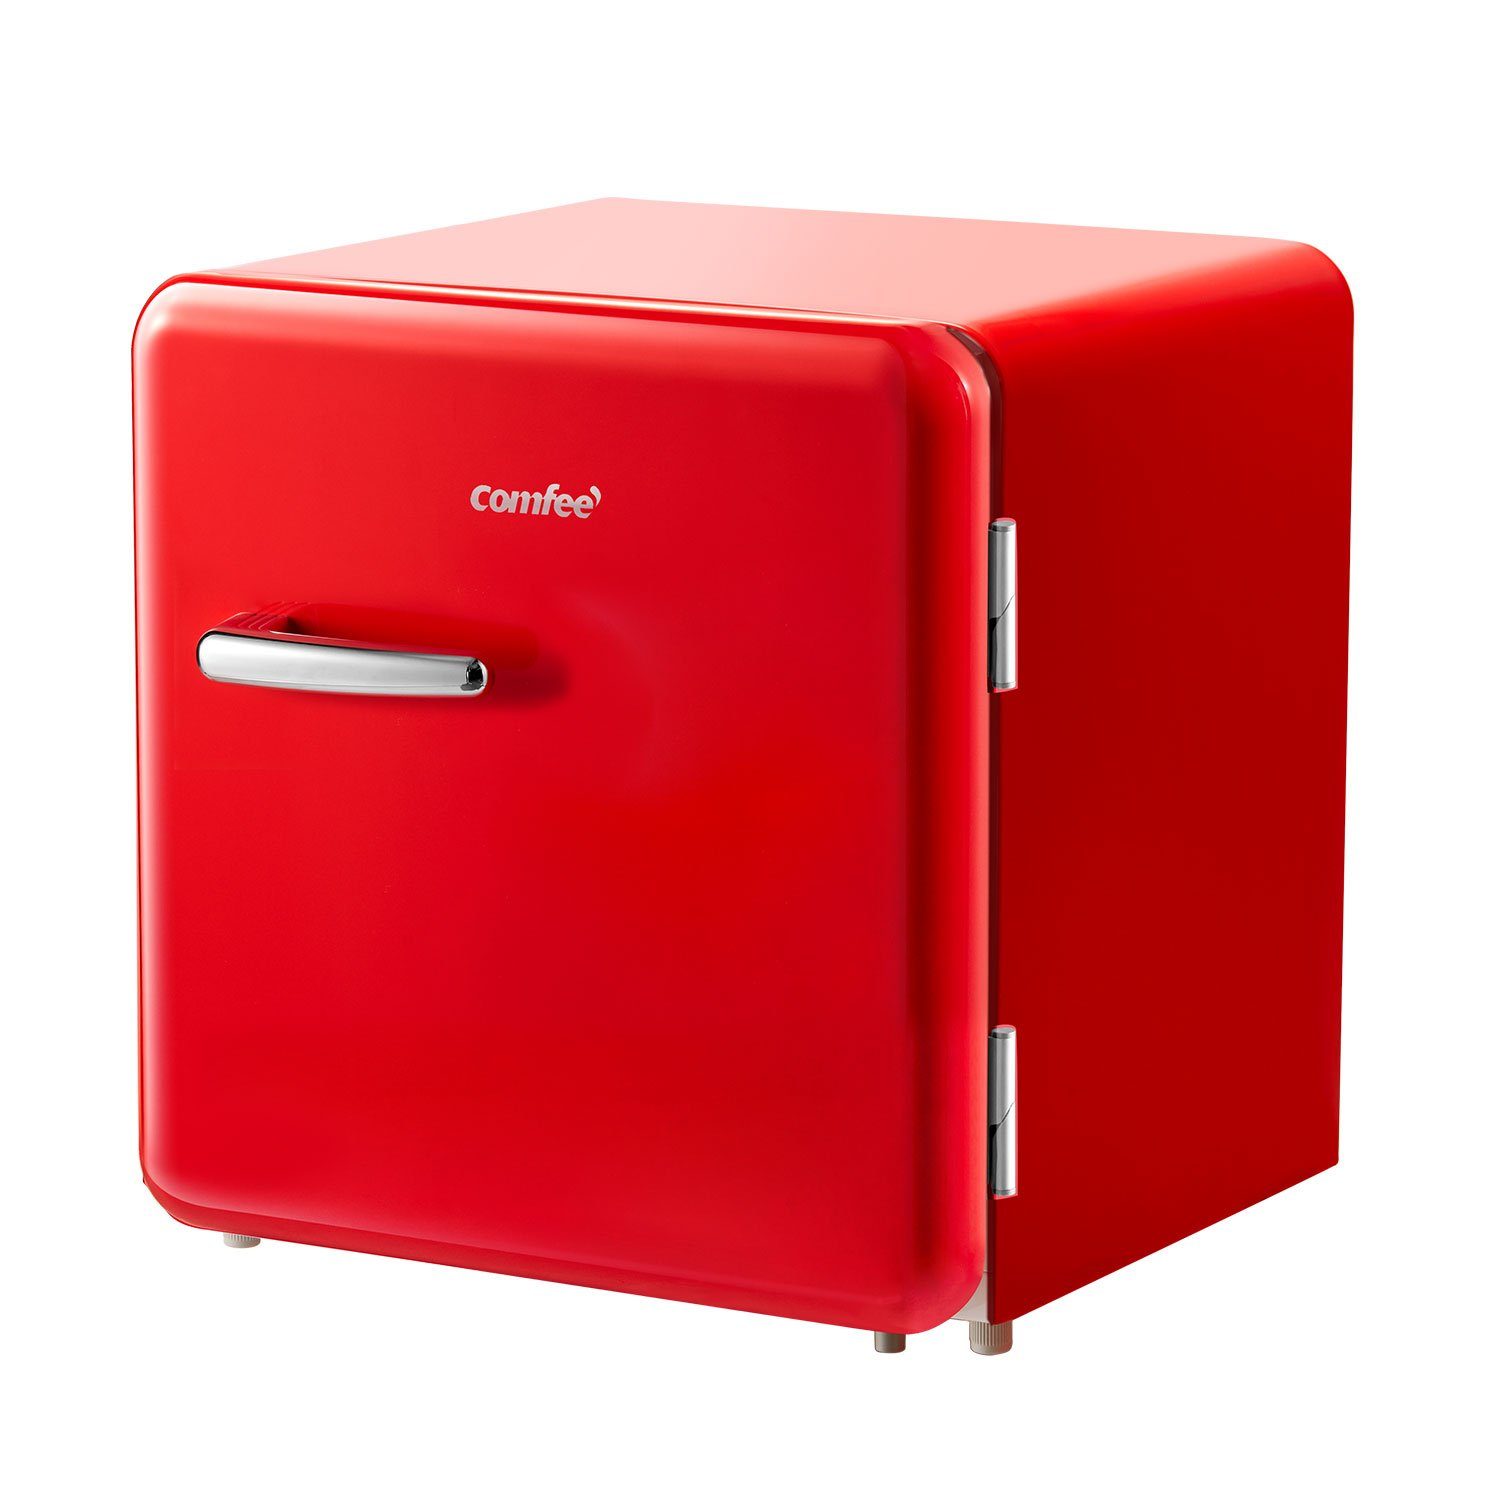 E Comfee RCD50RE1RT 100 kWh/Jahr/Rot Mini-Kühlschrank/Retro Kühlschrank 47L Kühlbox 50 cm Höhe 